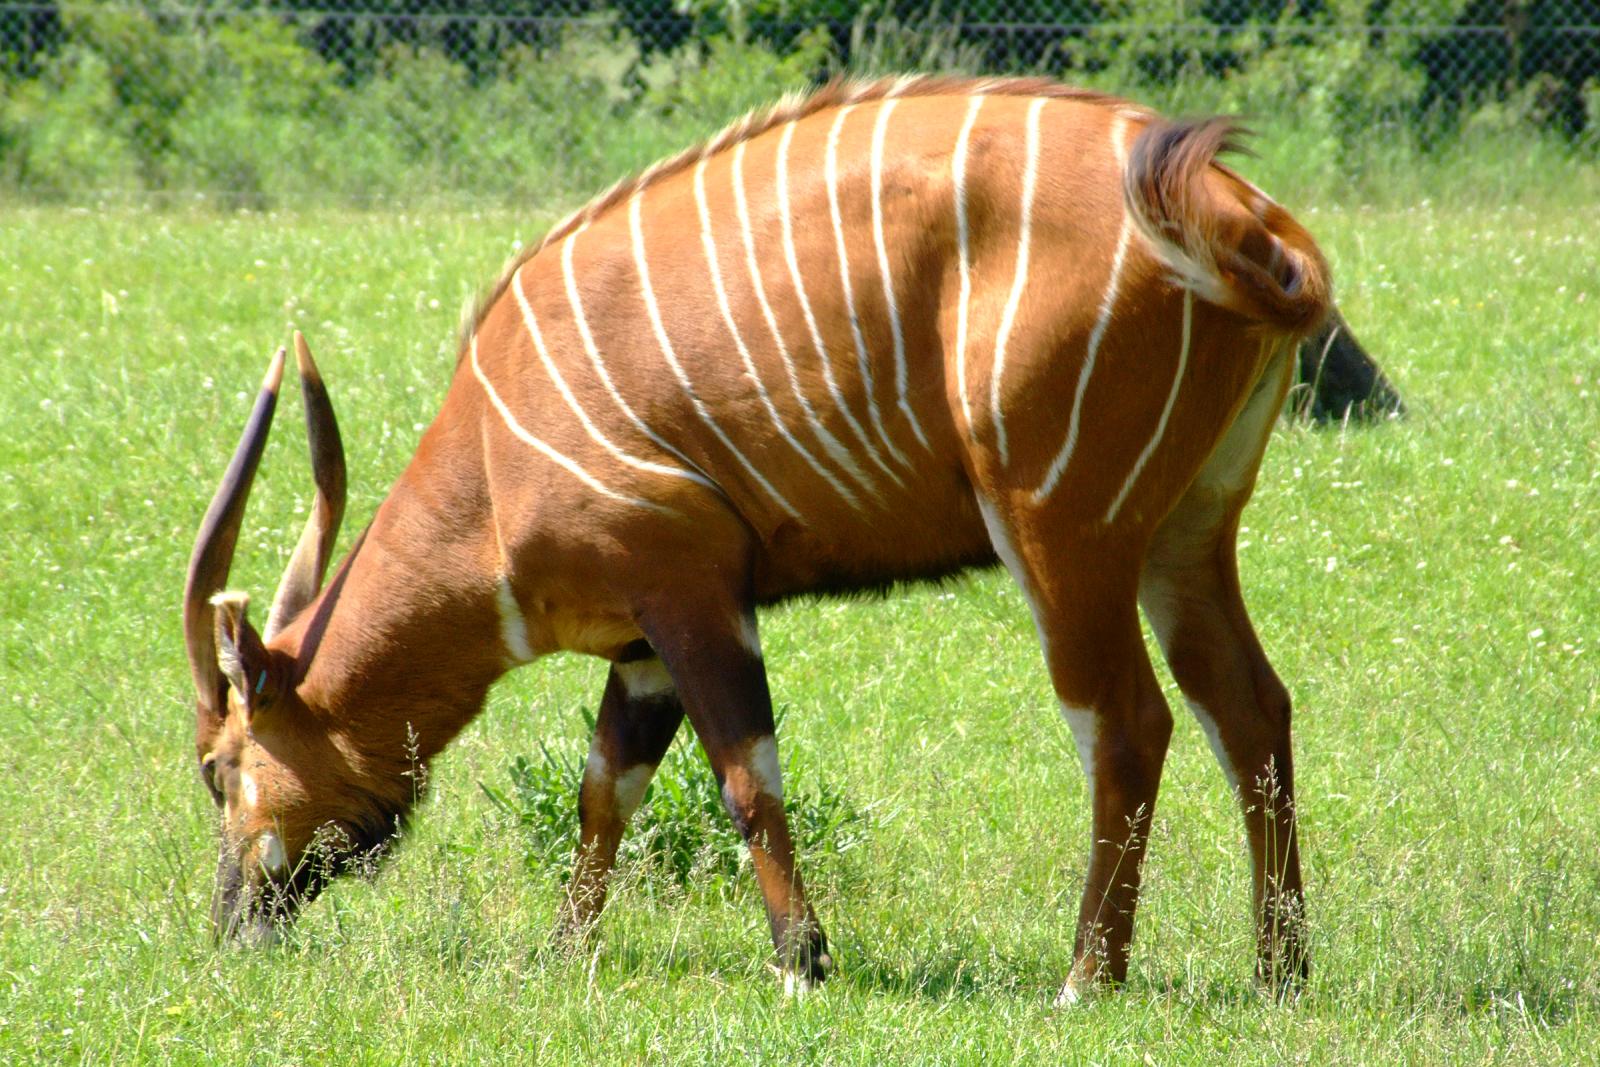 On brink of extinction, a new hope for Kenya's forest antelope